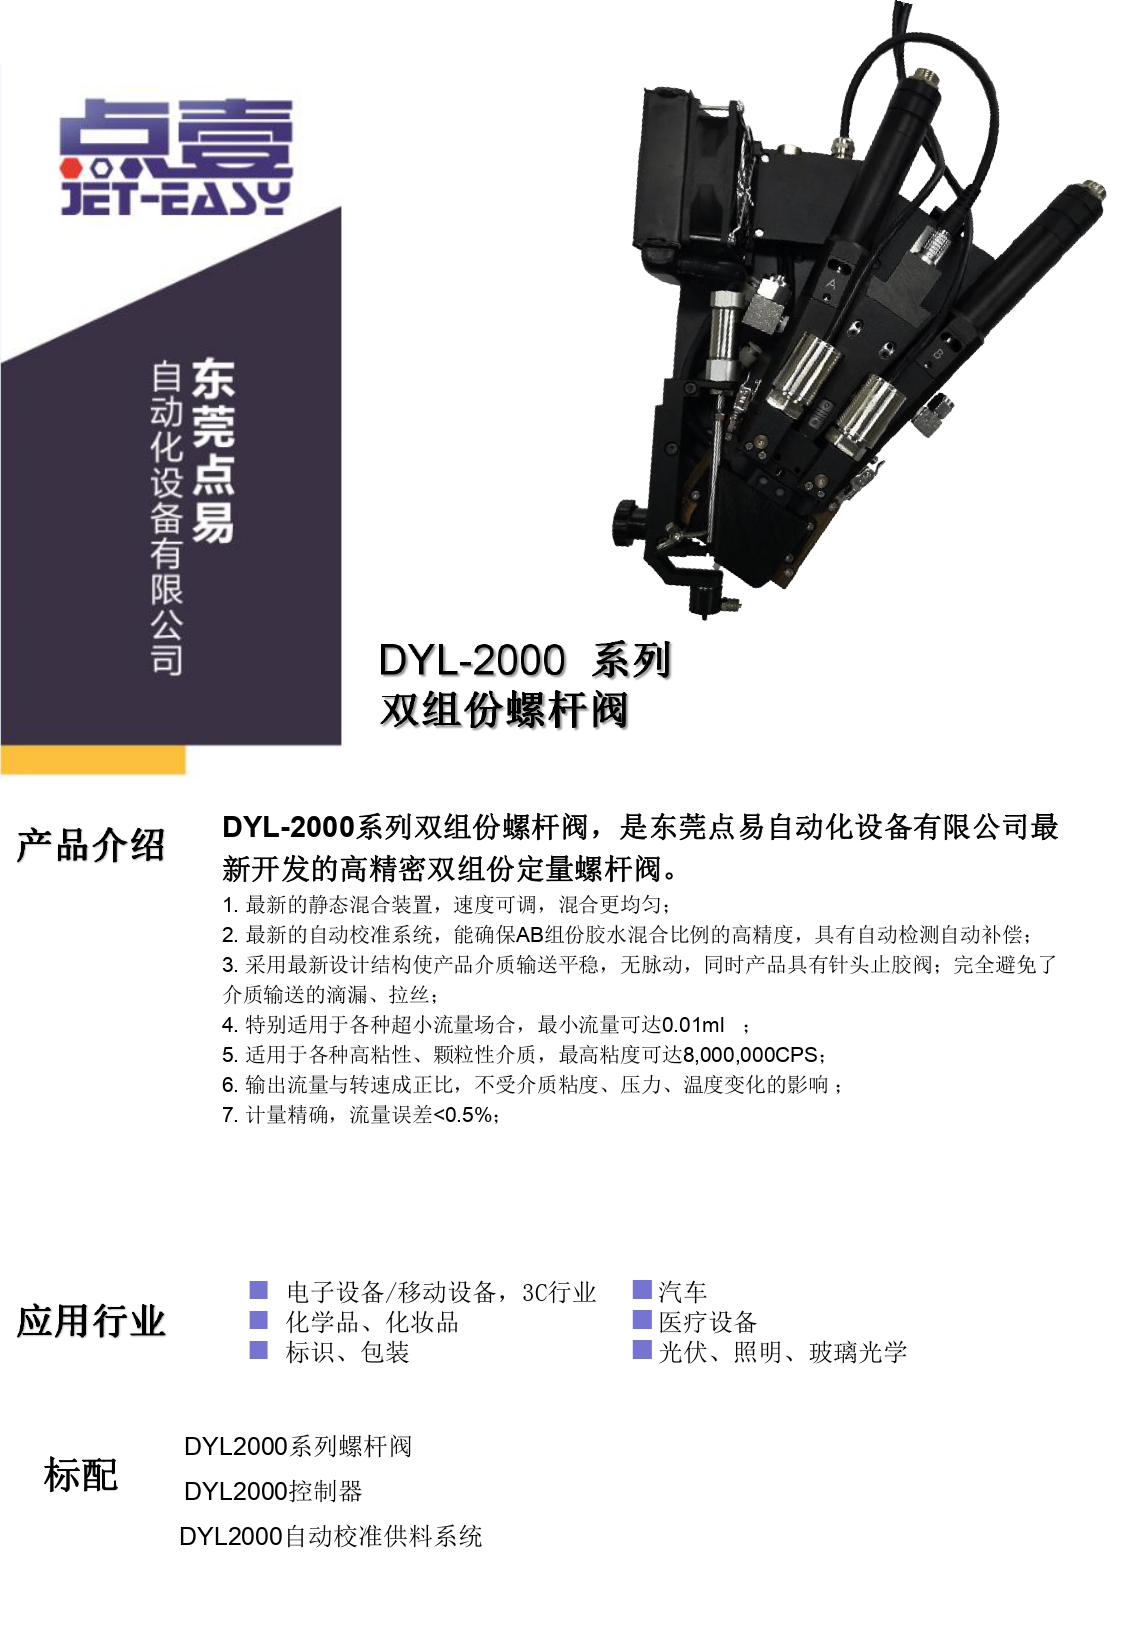 DYL-2000双组份螺杆阀简介资料(1)_page-0001.jpg